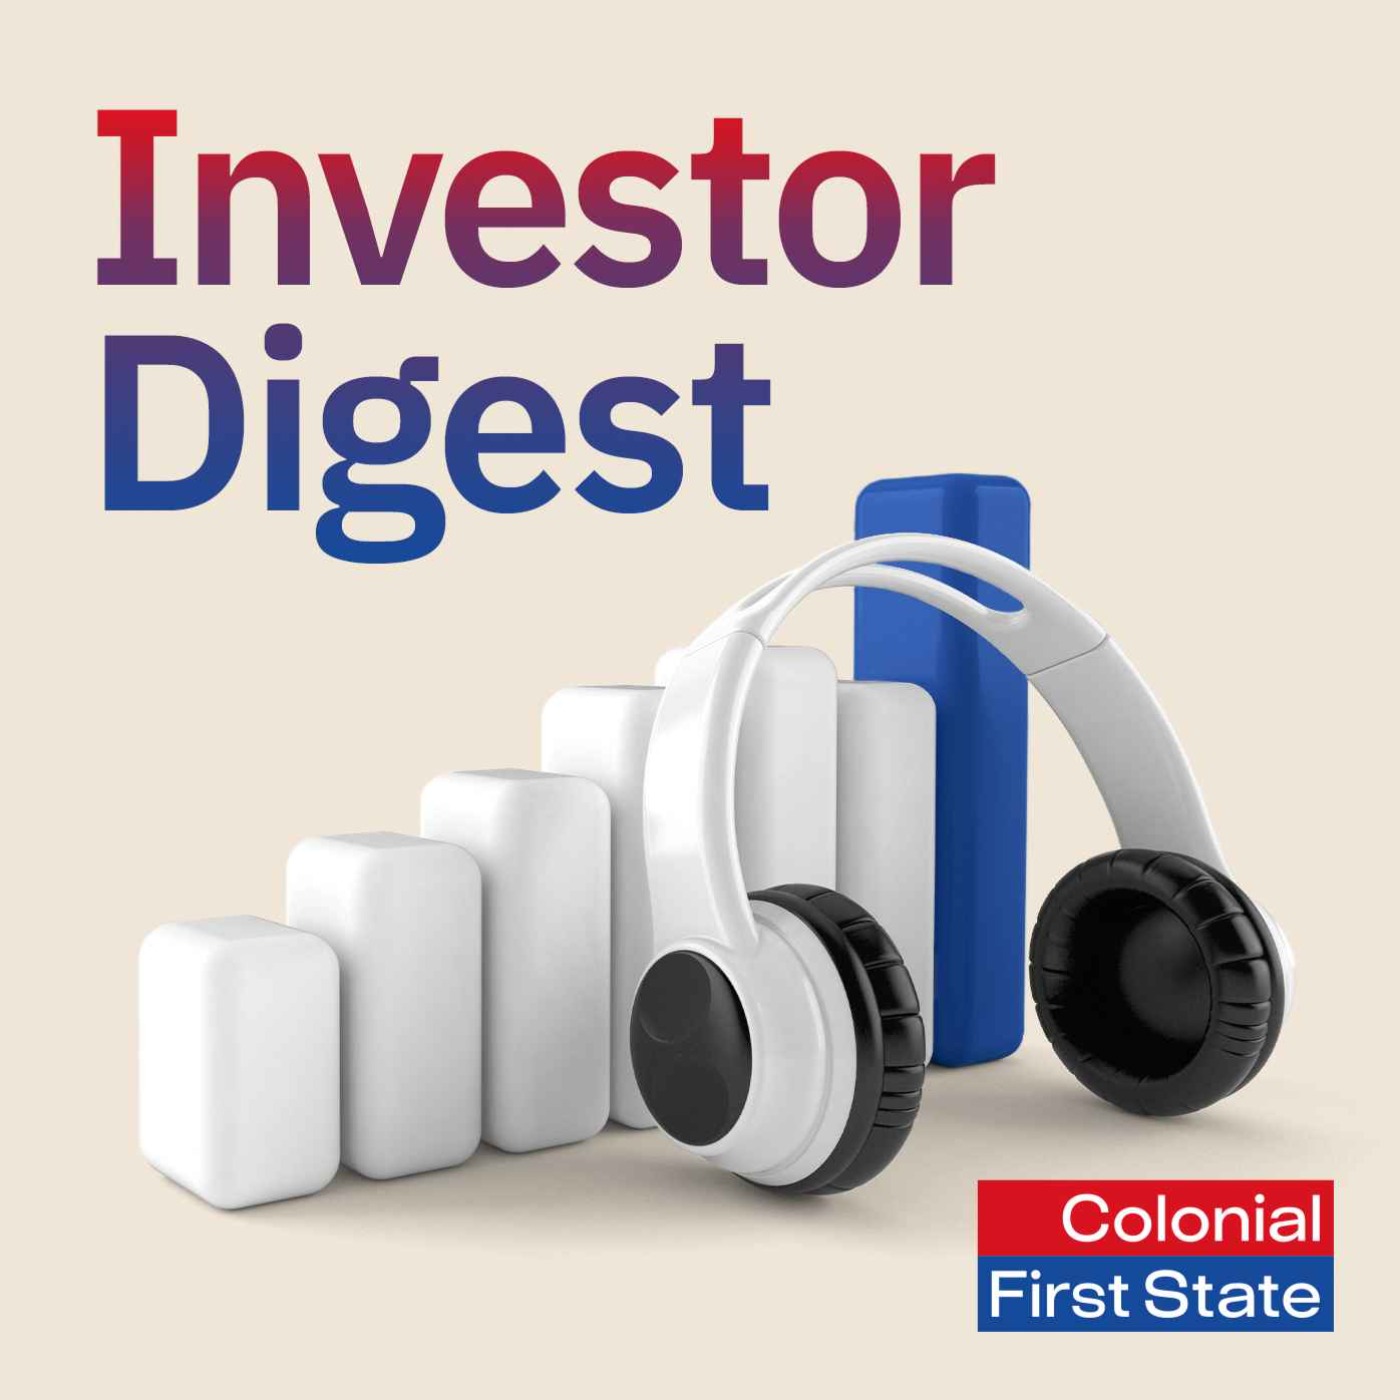 Investor Digest